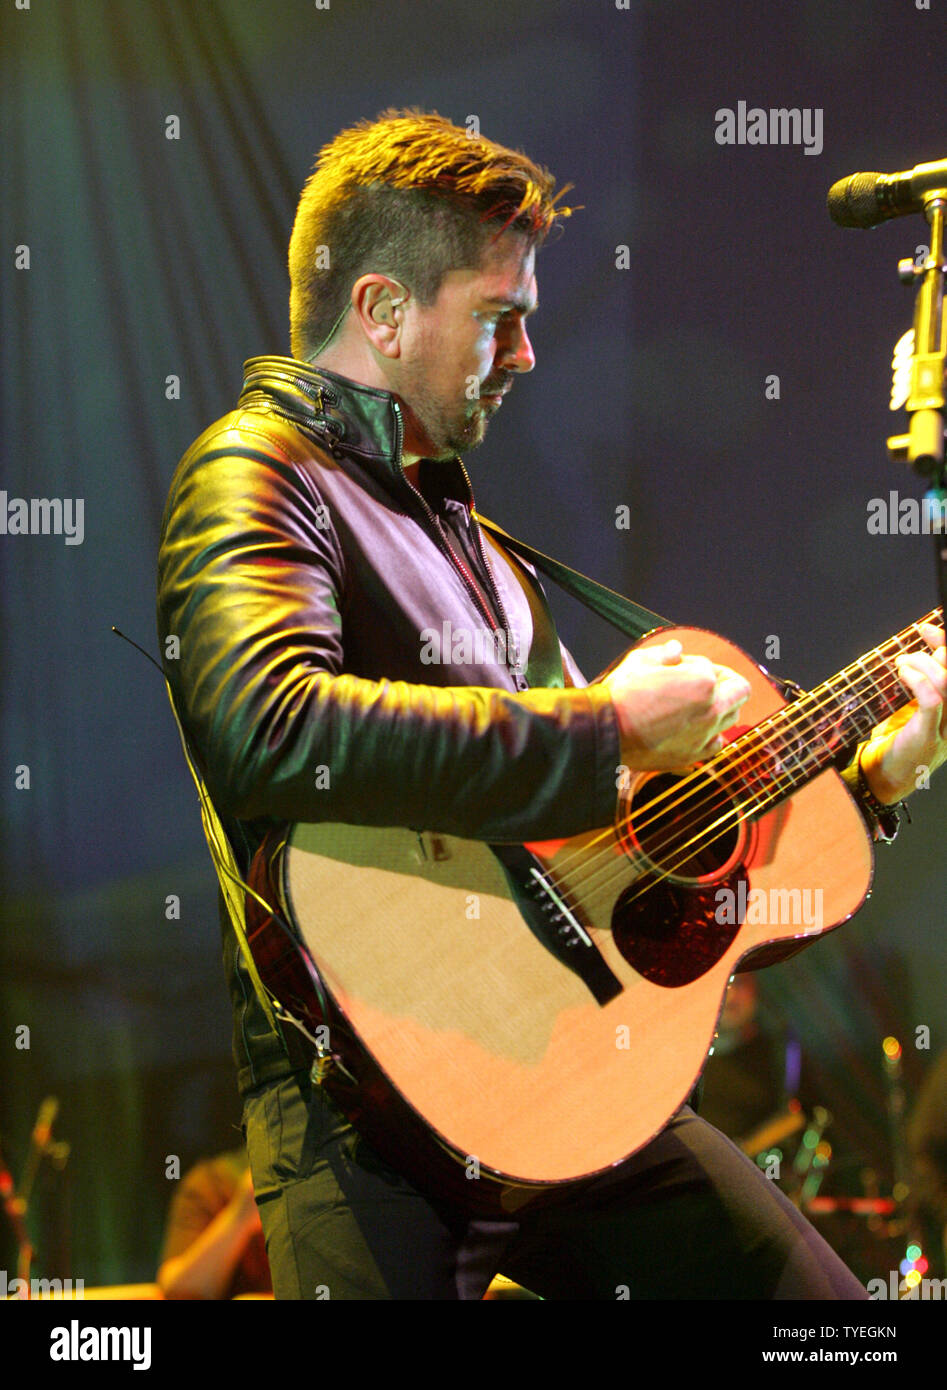 Juanes performs at the Hard Rock Live at Seminole Hard Rock Hotel and Casino in Hollywood, Florida on June 27, 2013. UPI/Michael Bush Stock Photo